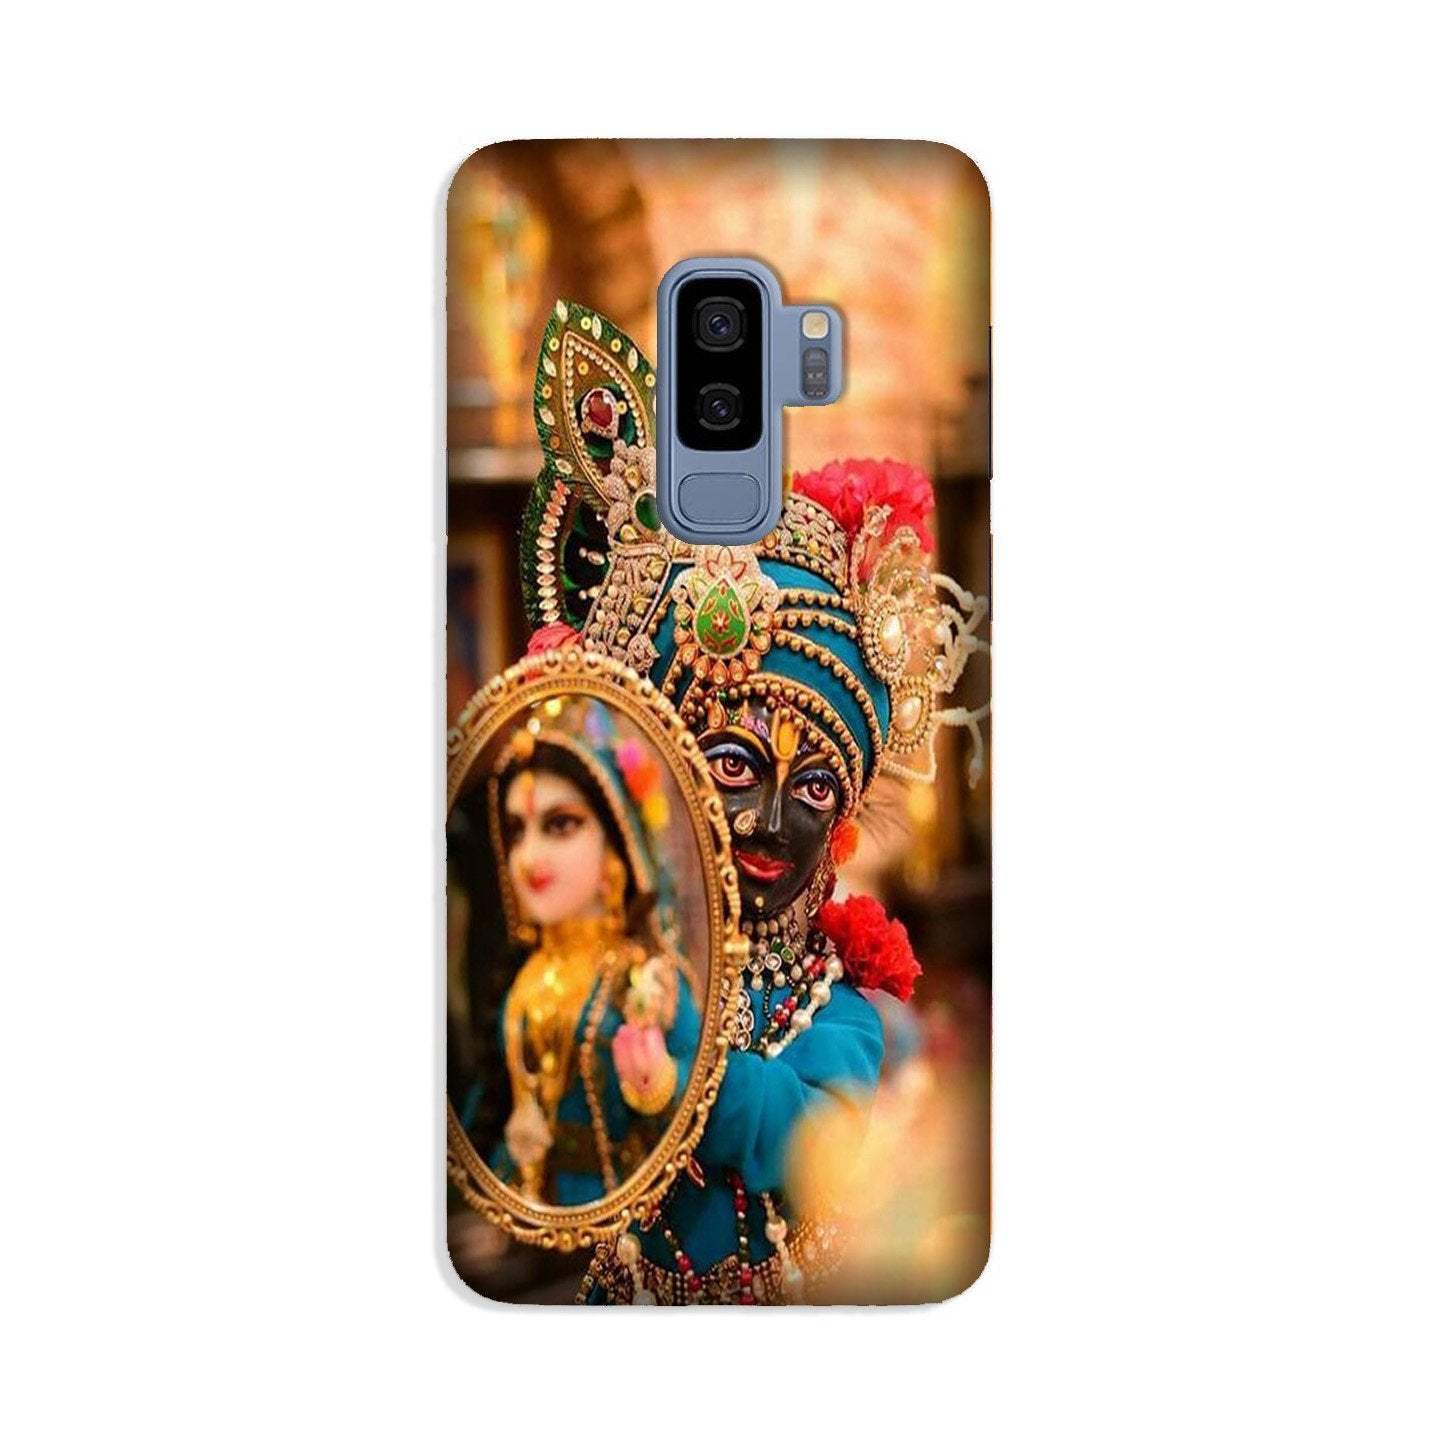 Lord Krishna5 Case for Galaxy S9 Plus